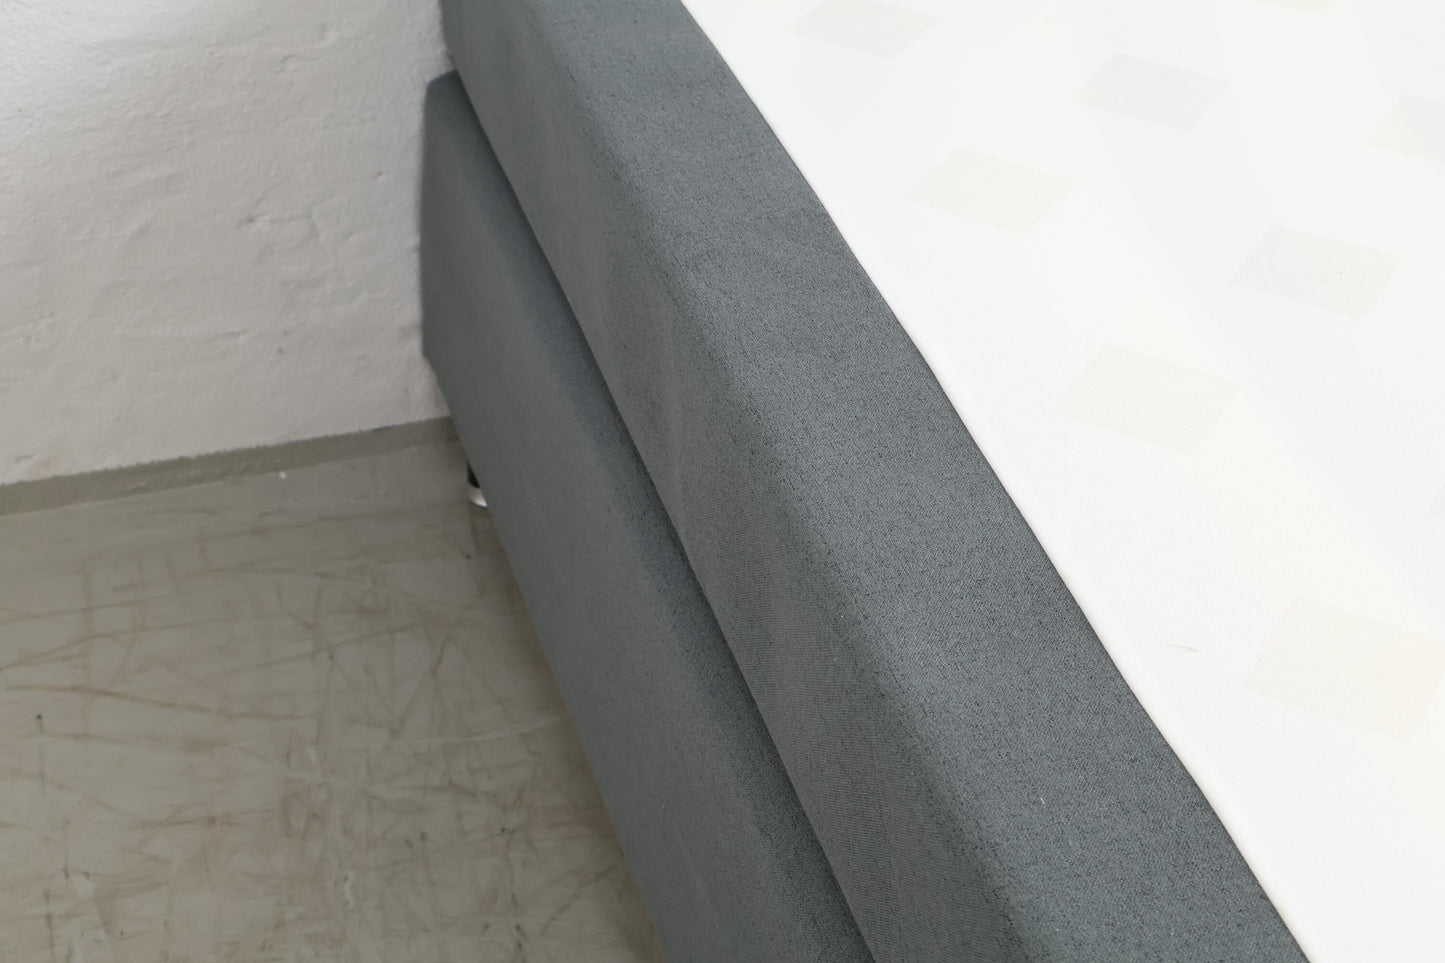 Nyrenset | Grå kontinentalseng med minimalistisk design 180x200cm